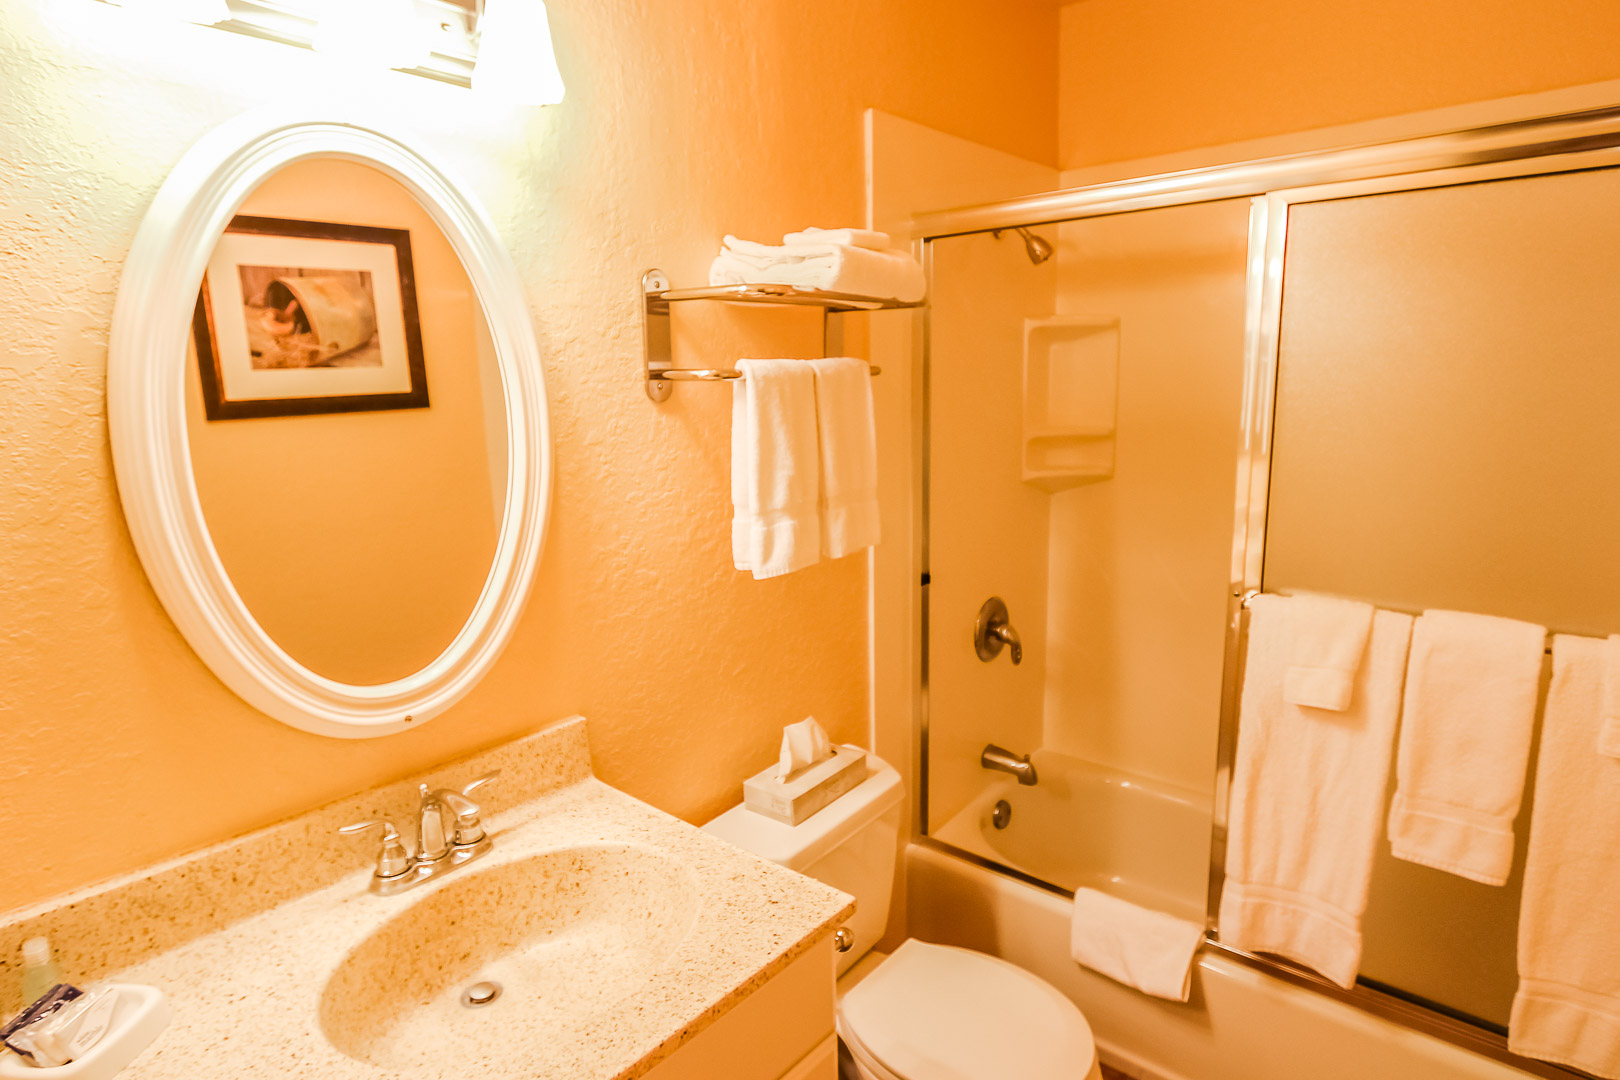 A vibrant and clean bathroom at VRI's Lake Arrowhead Chalets in California.